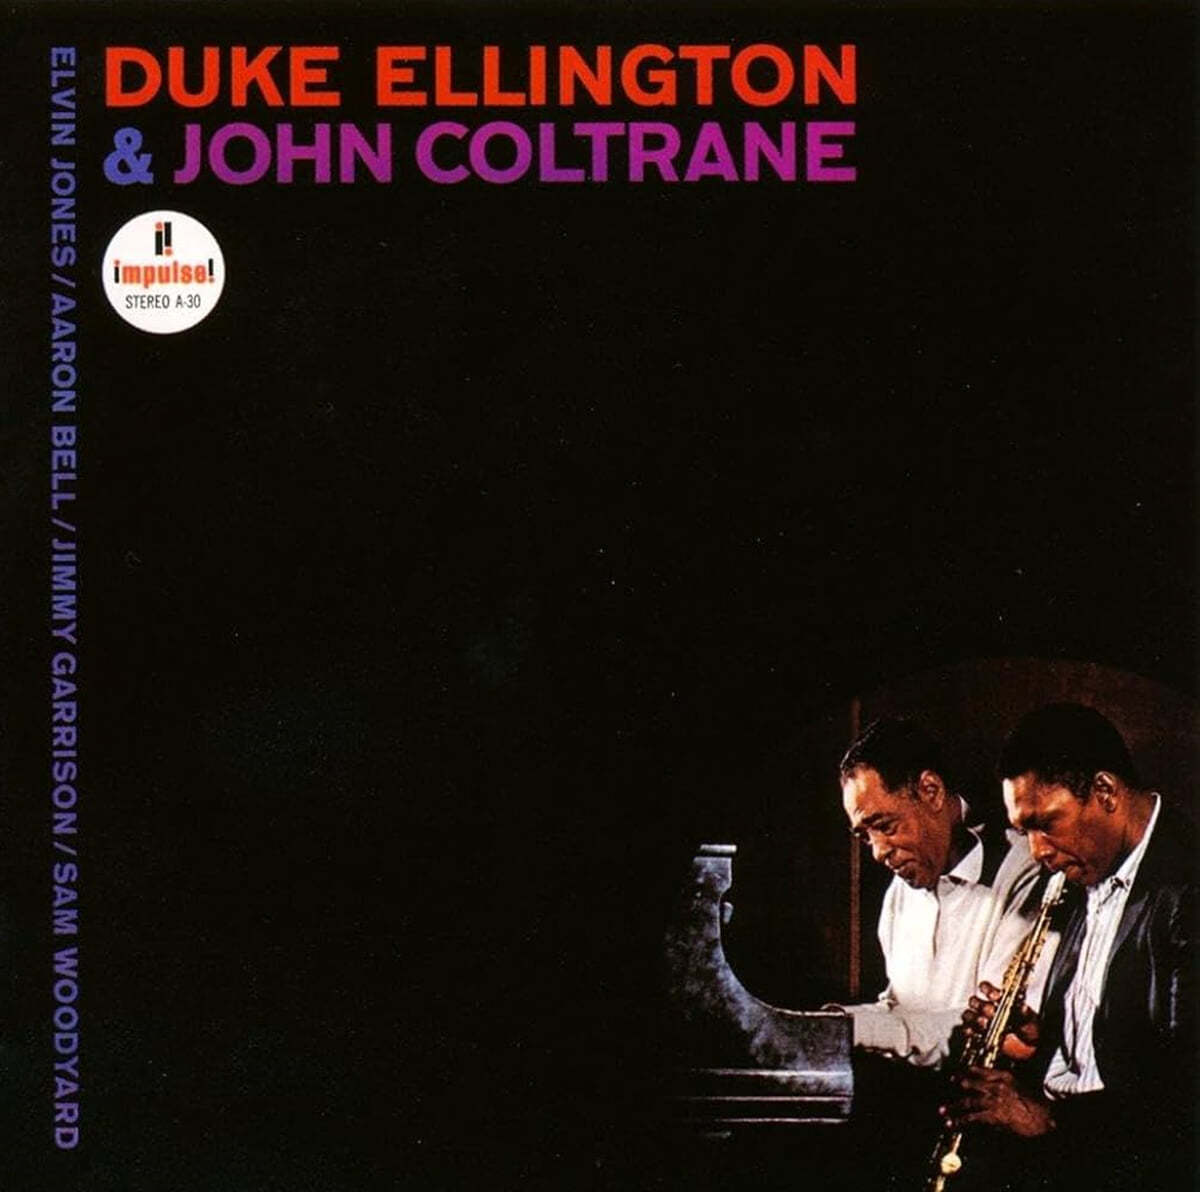 Duke Ellington / John Coltrane (듀크 엘링턴 / 존 콜트레인) - Duke Ellington & John Coltrane